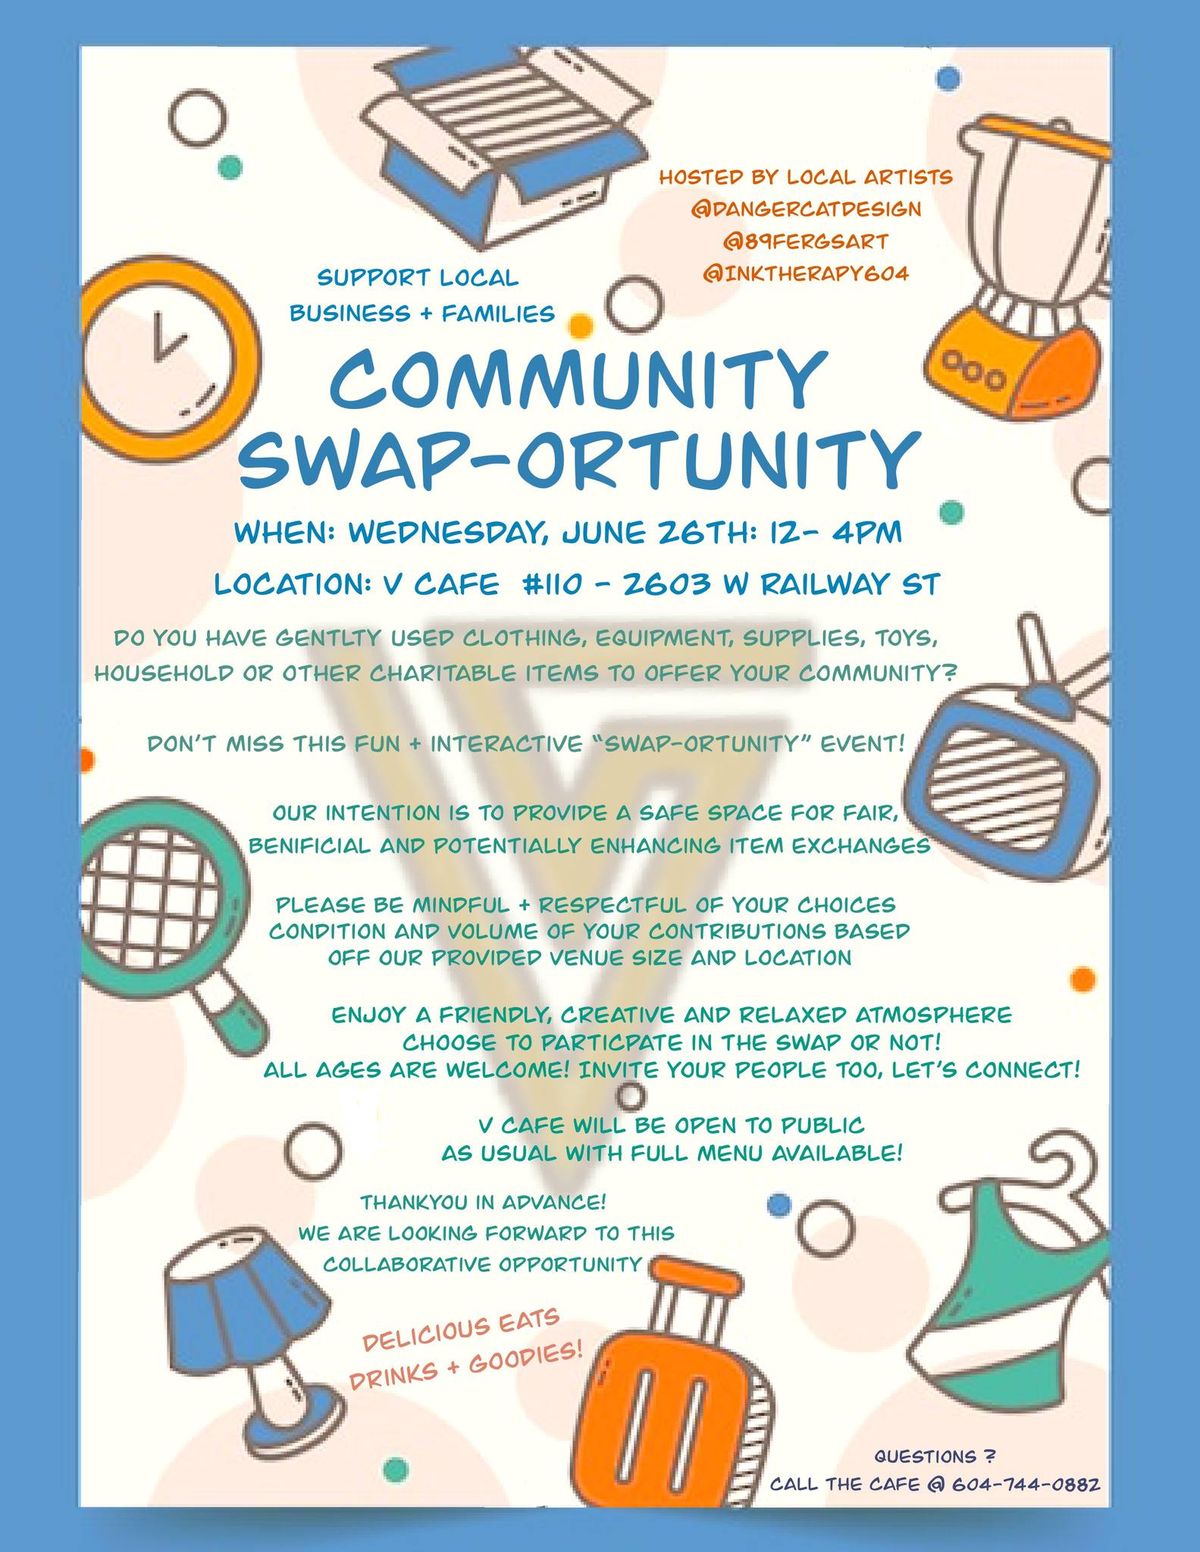 Community Swaportunity!